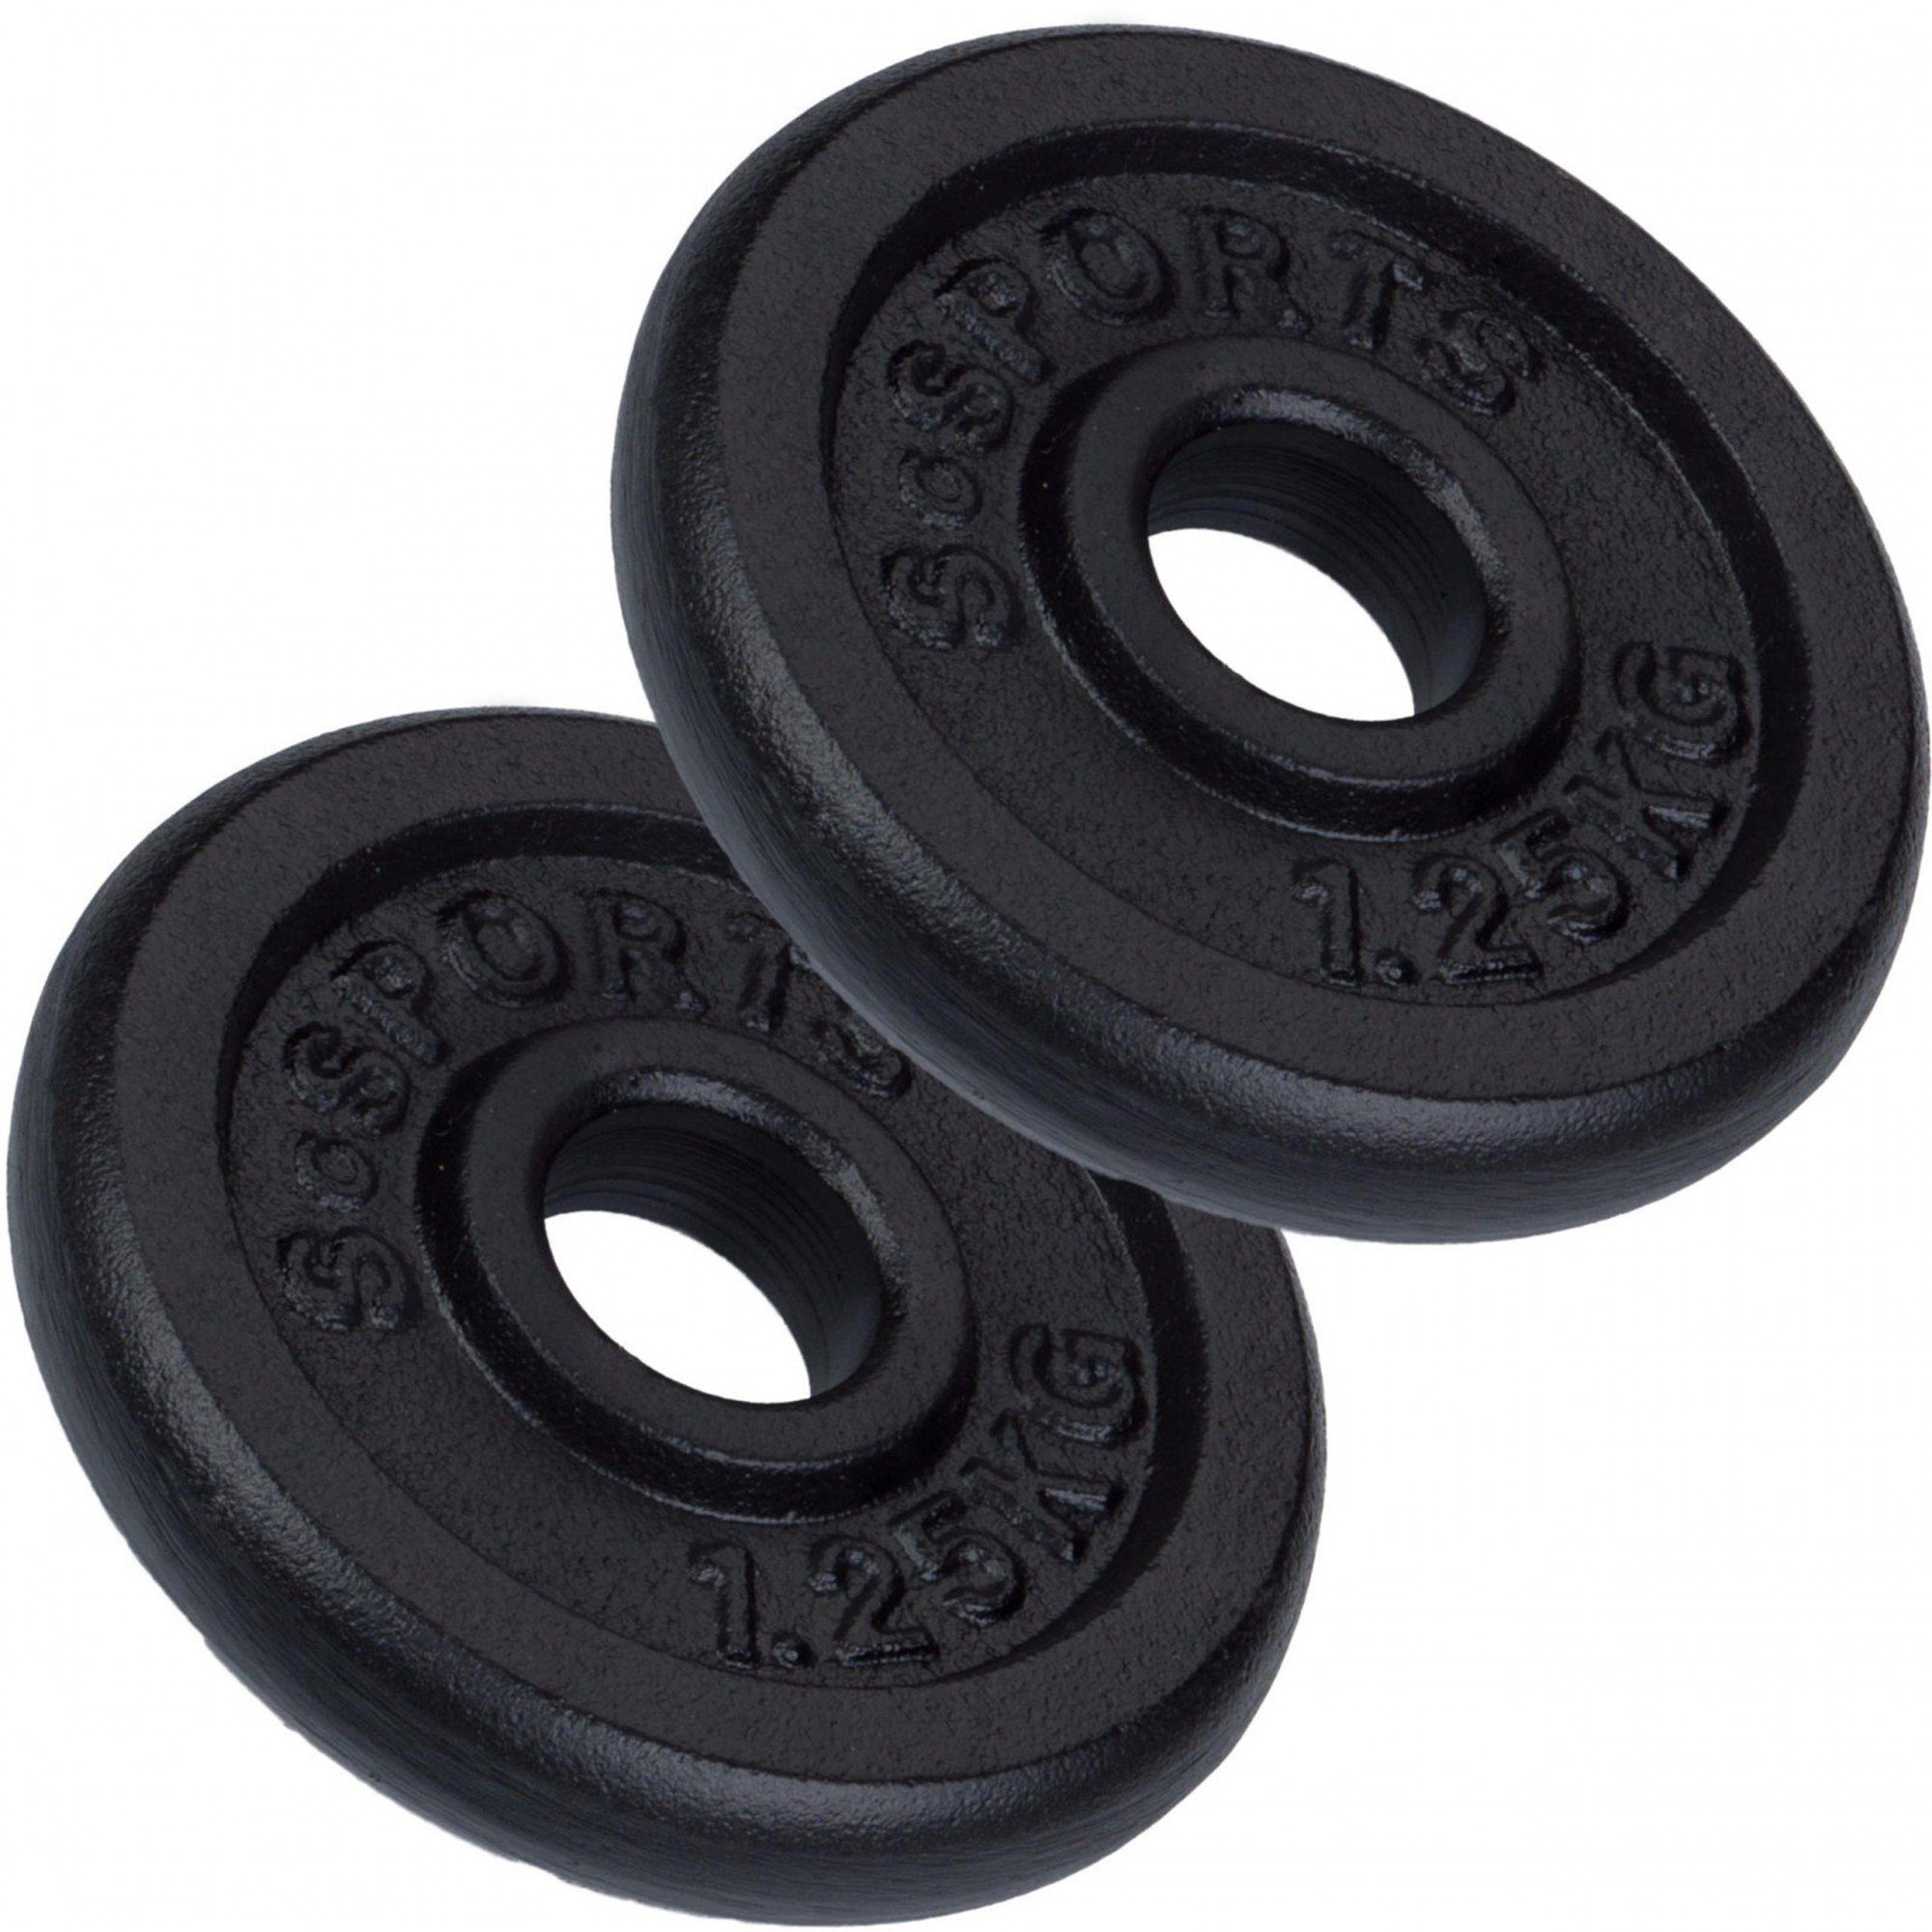 Westside Discs Hantel-Set 34,5kg Curlset Gusseisen Gewichte 120 SZ 30mm Curlstange cm